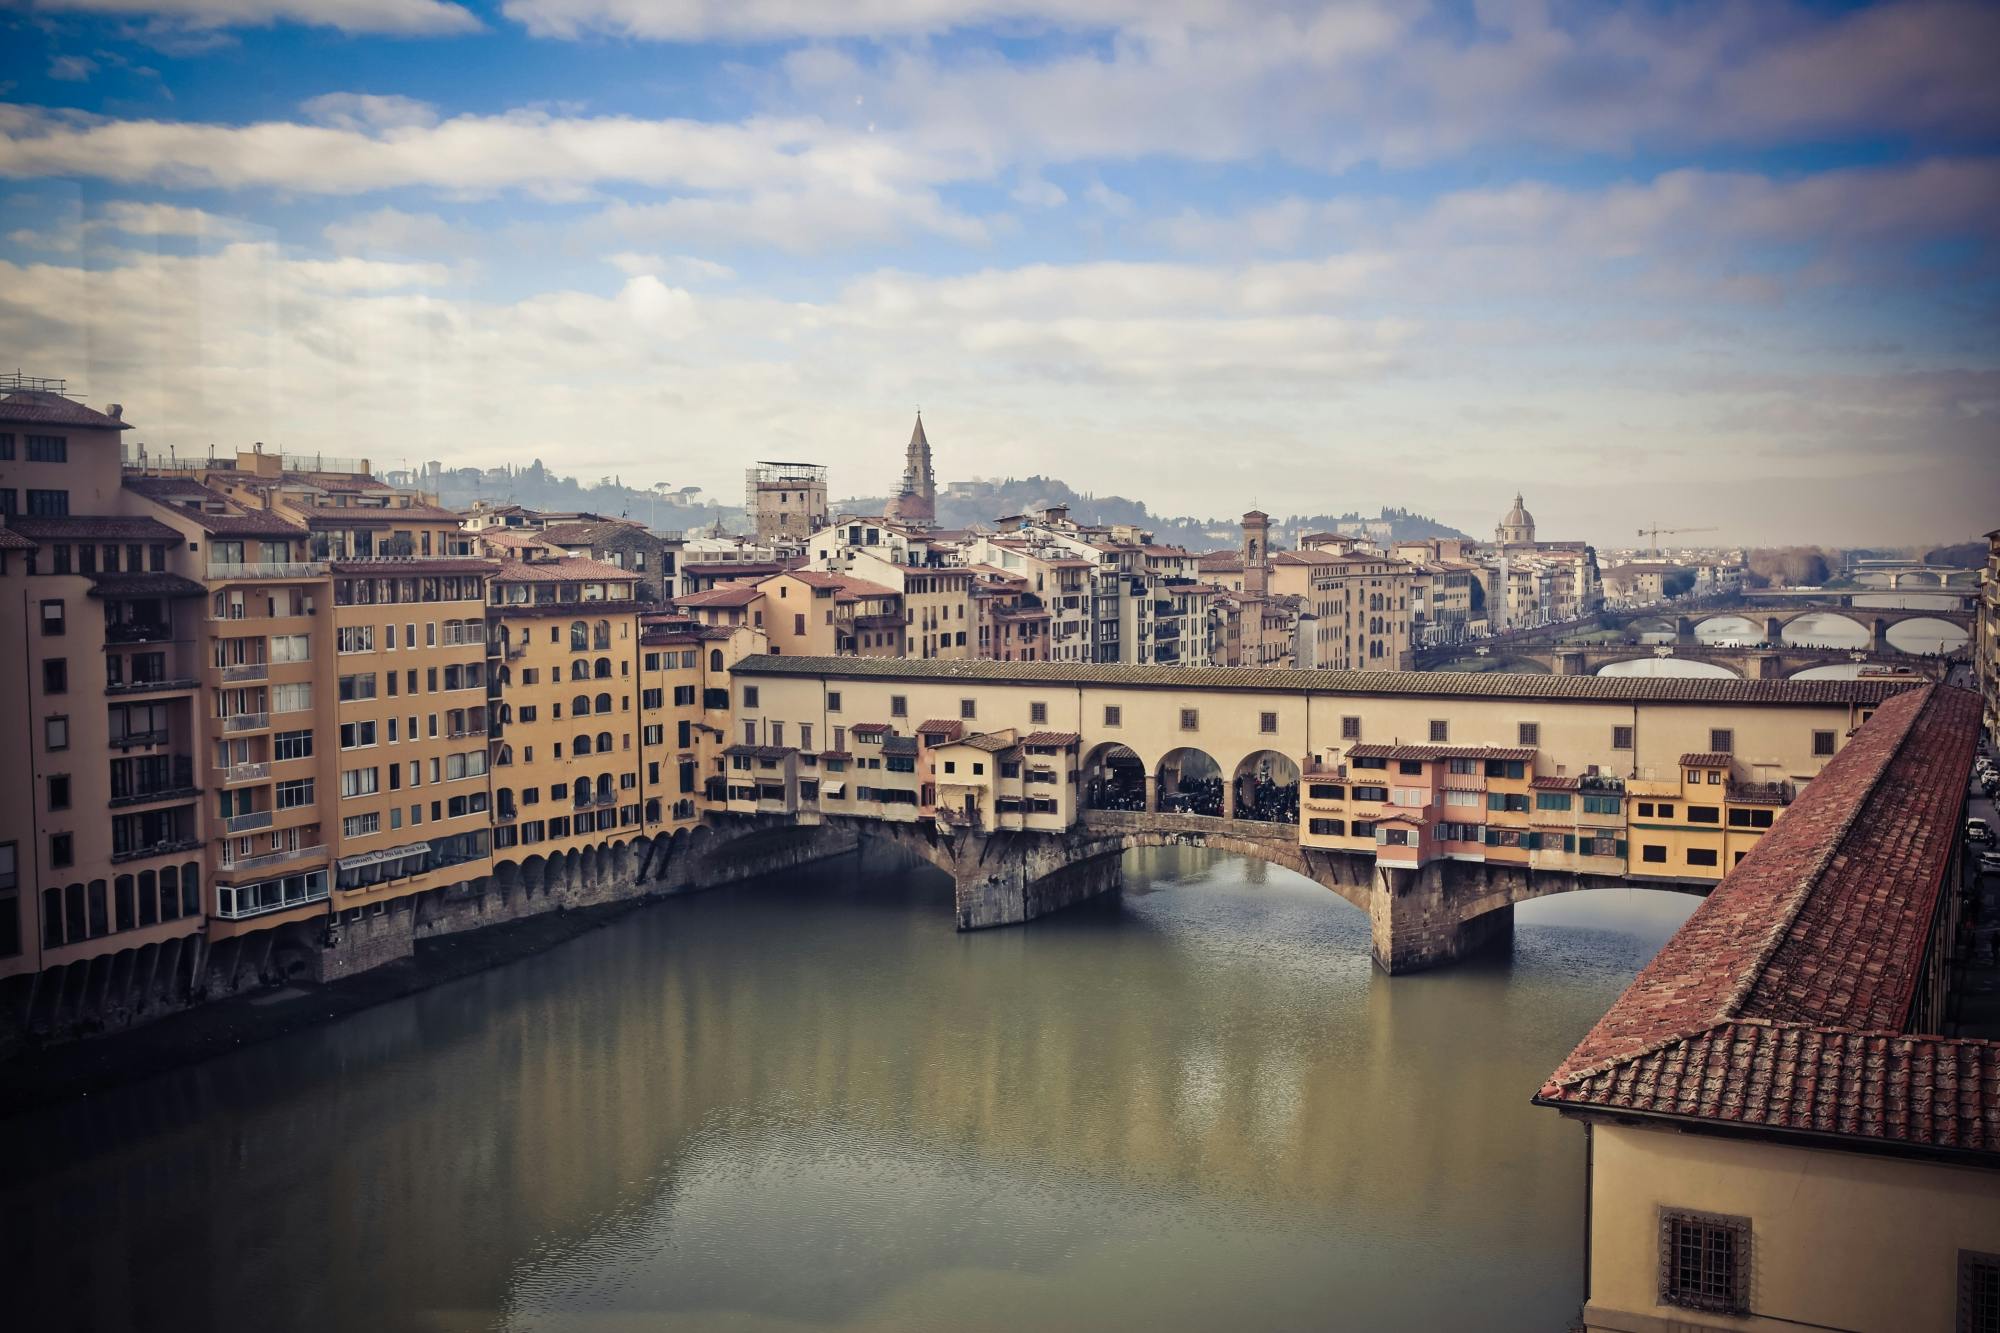 Florence-tour per hogesnelheidstrein vanuit Rome inclusief Uffizi-tickets